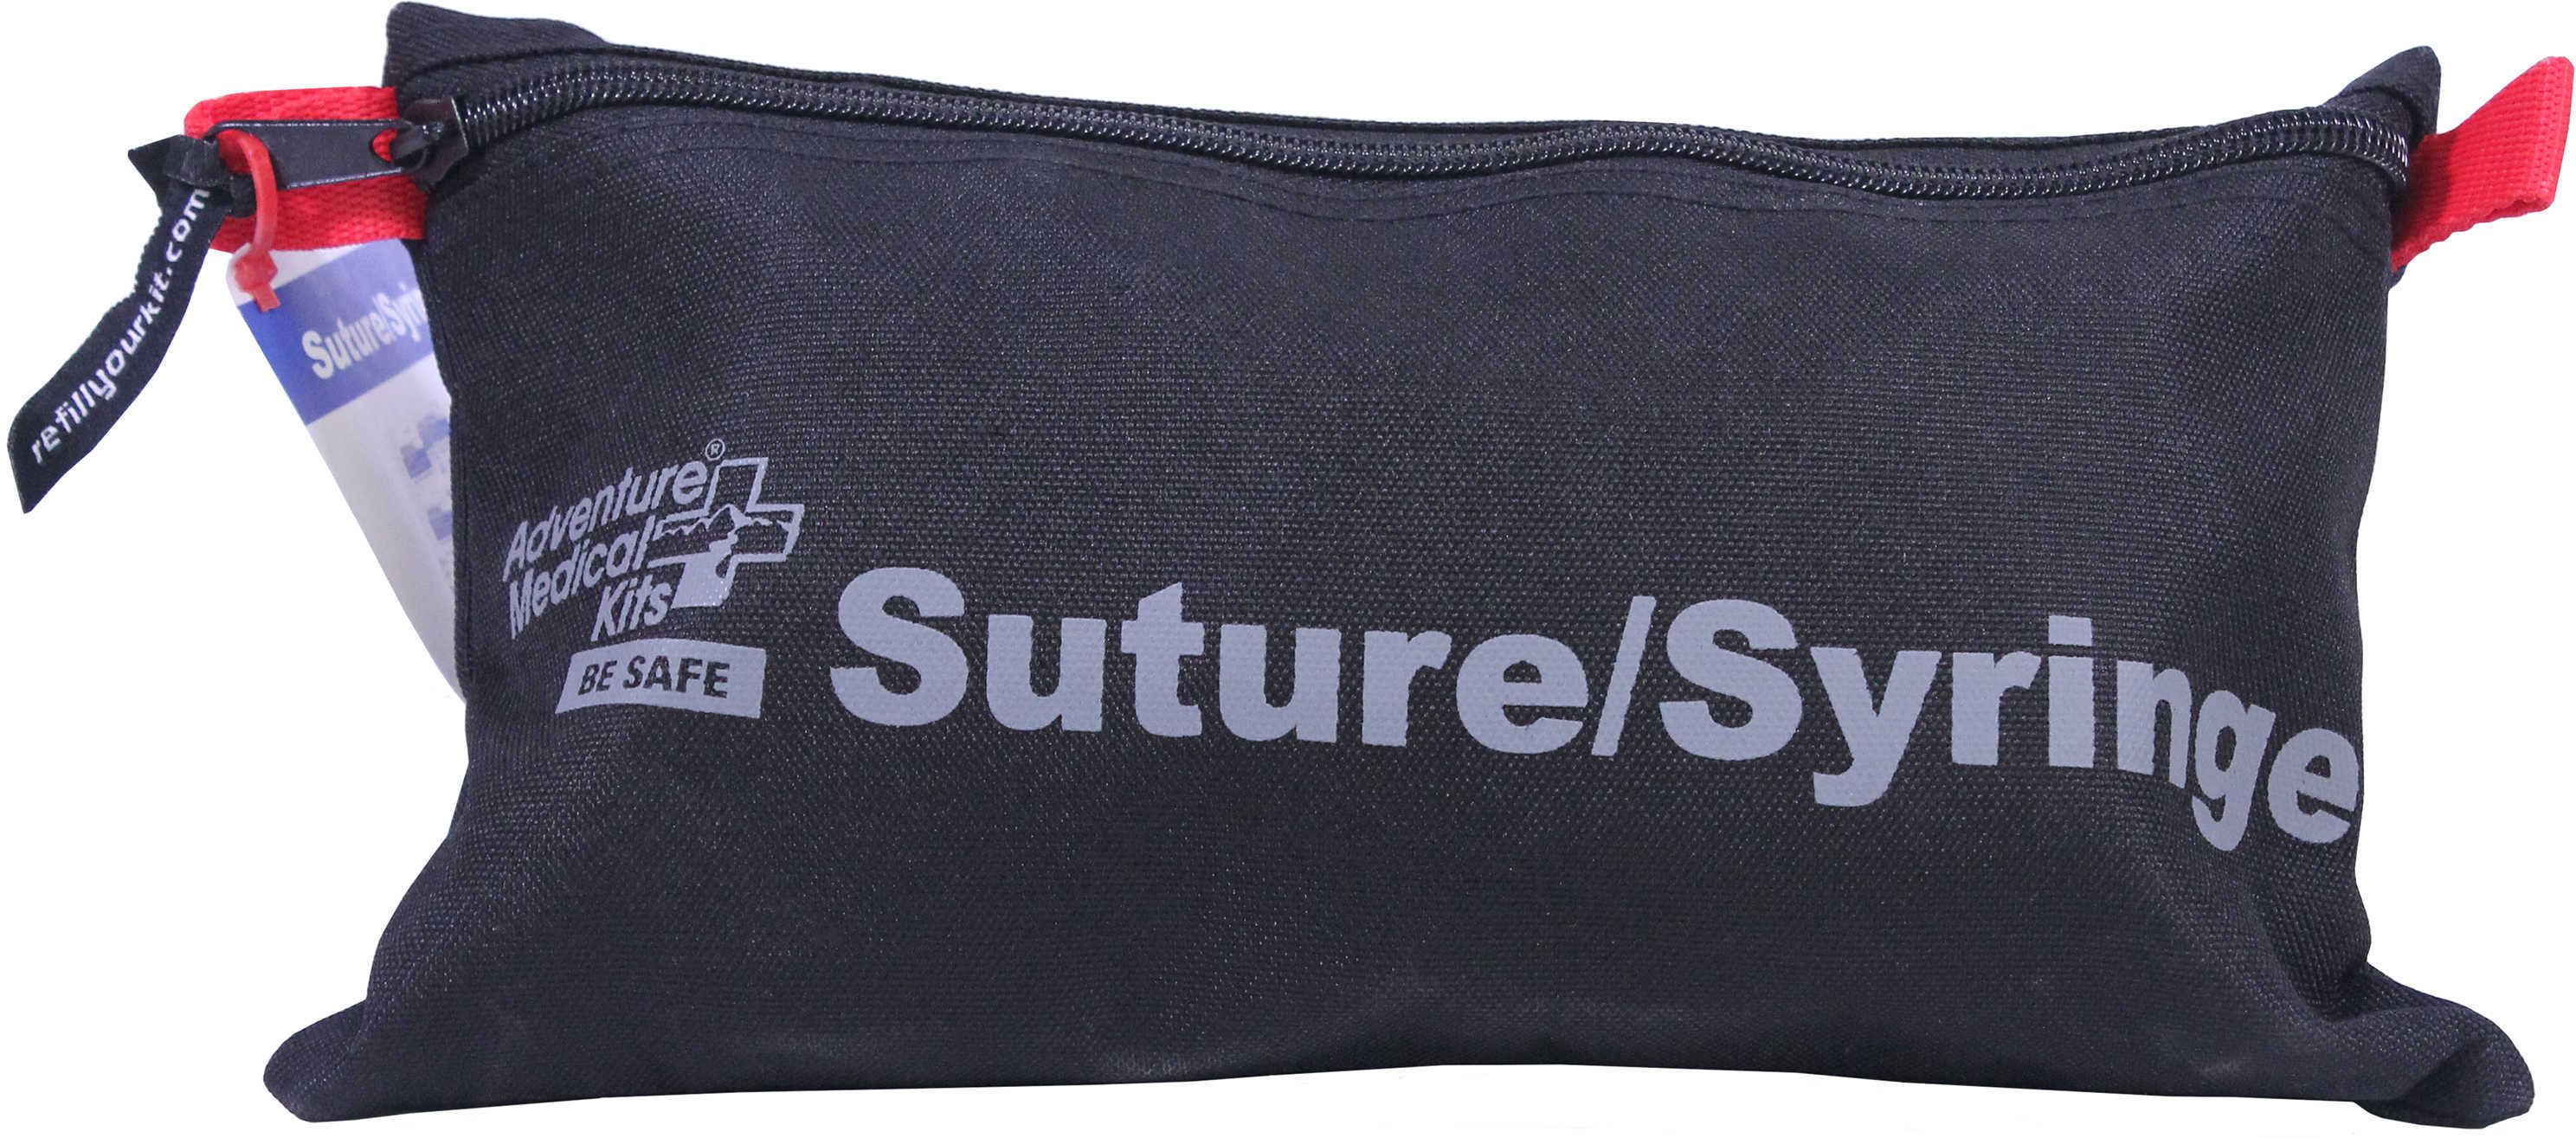 AMK Suture/Syringe Kit (6)